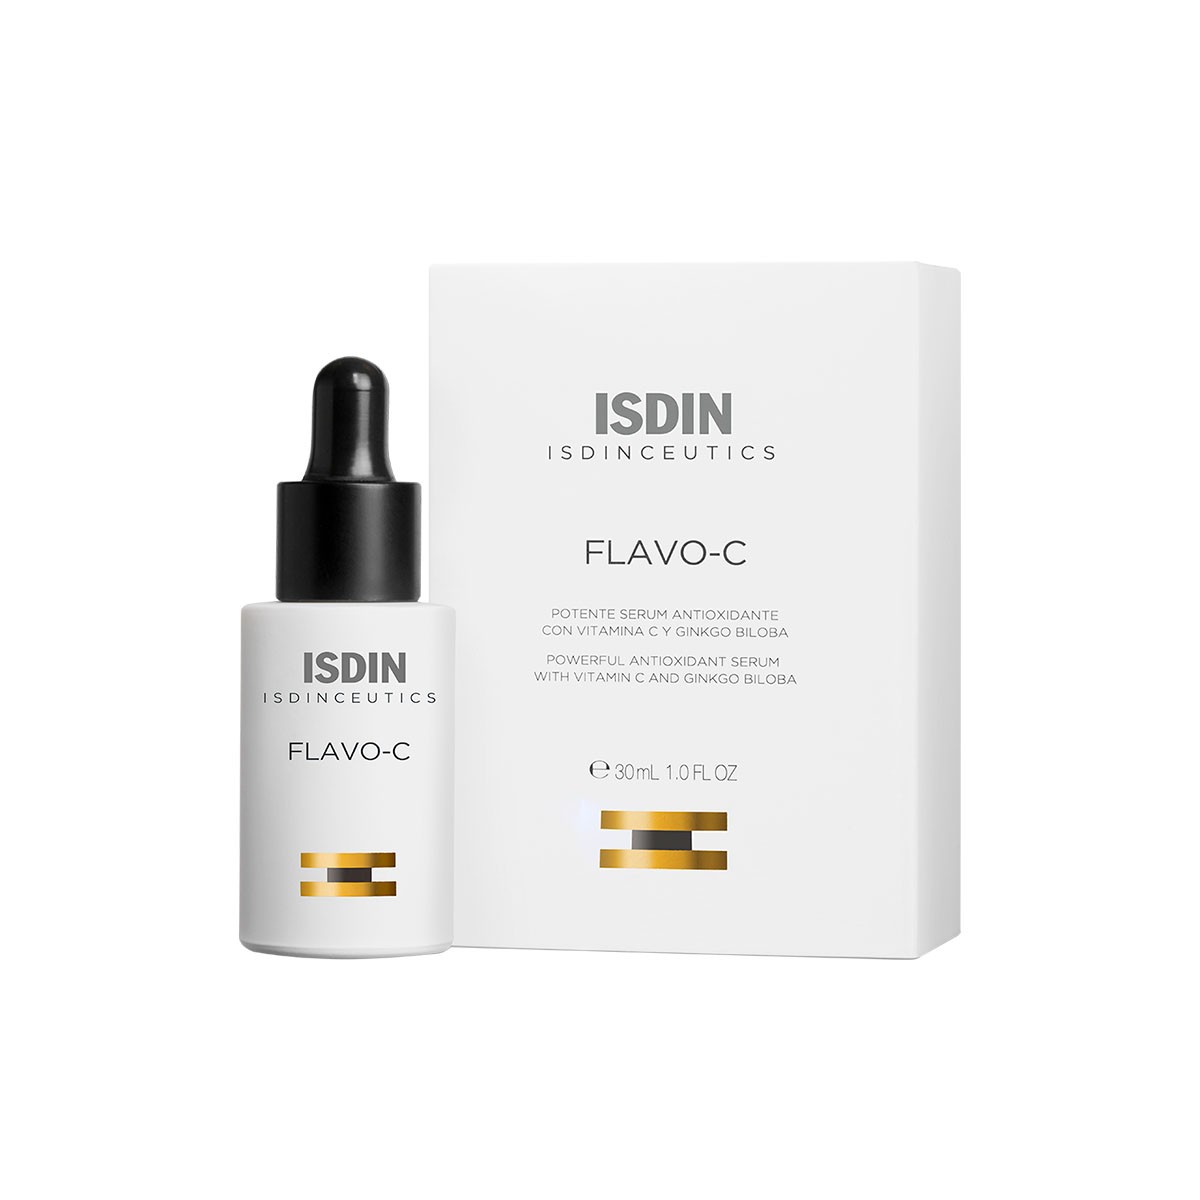 Isdinceutics Flavo-C, 30 ml